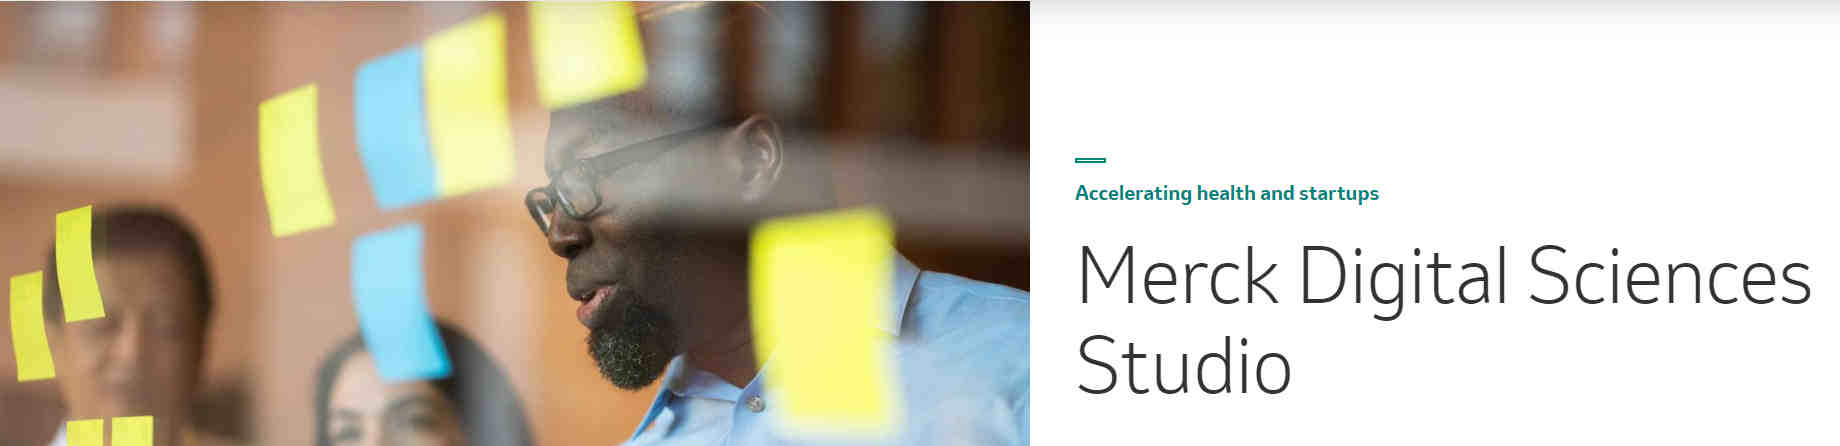 Merck Digital Sciences Studio Launches to Support Biomedical Startups